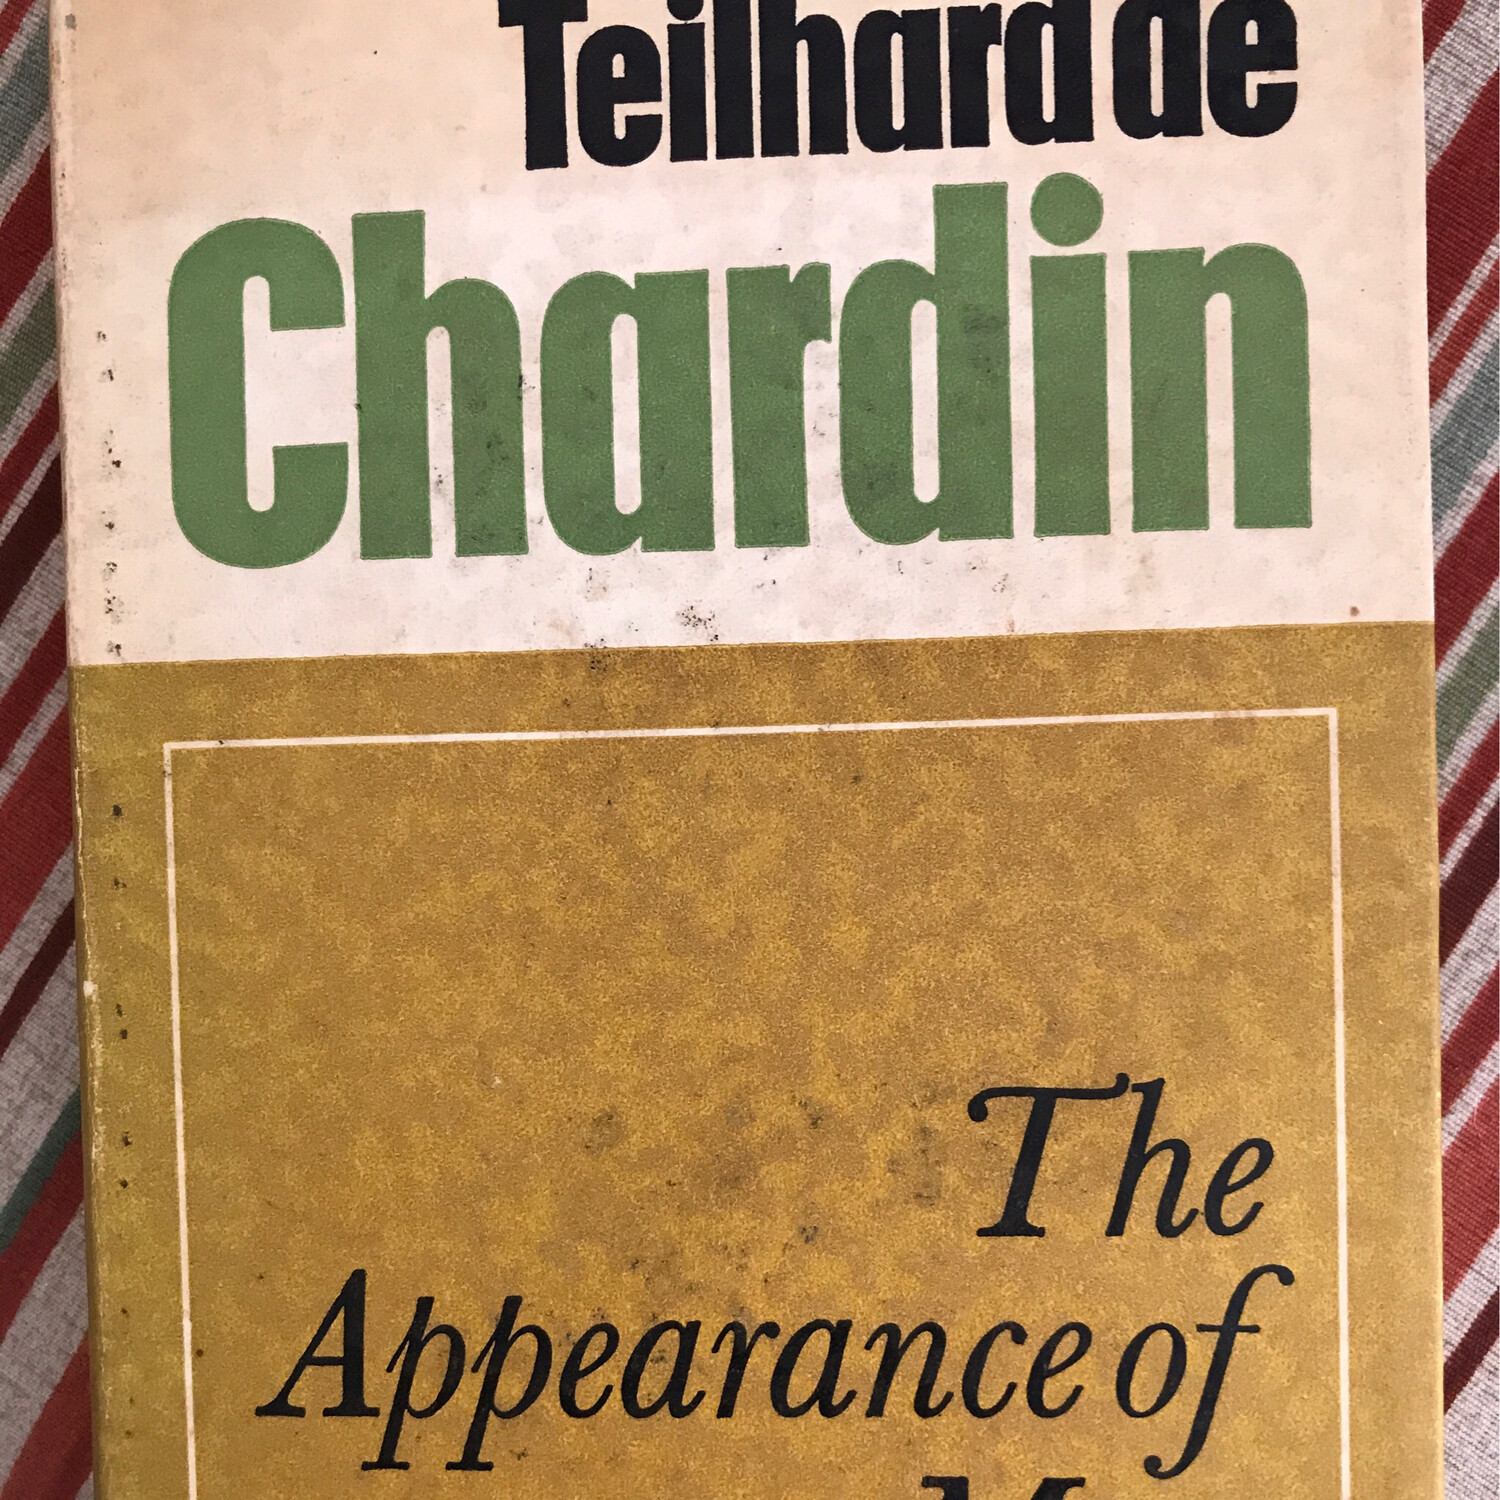 The Appearance Of Man, Teilharde de Chardin